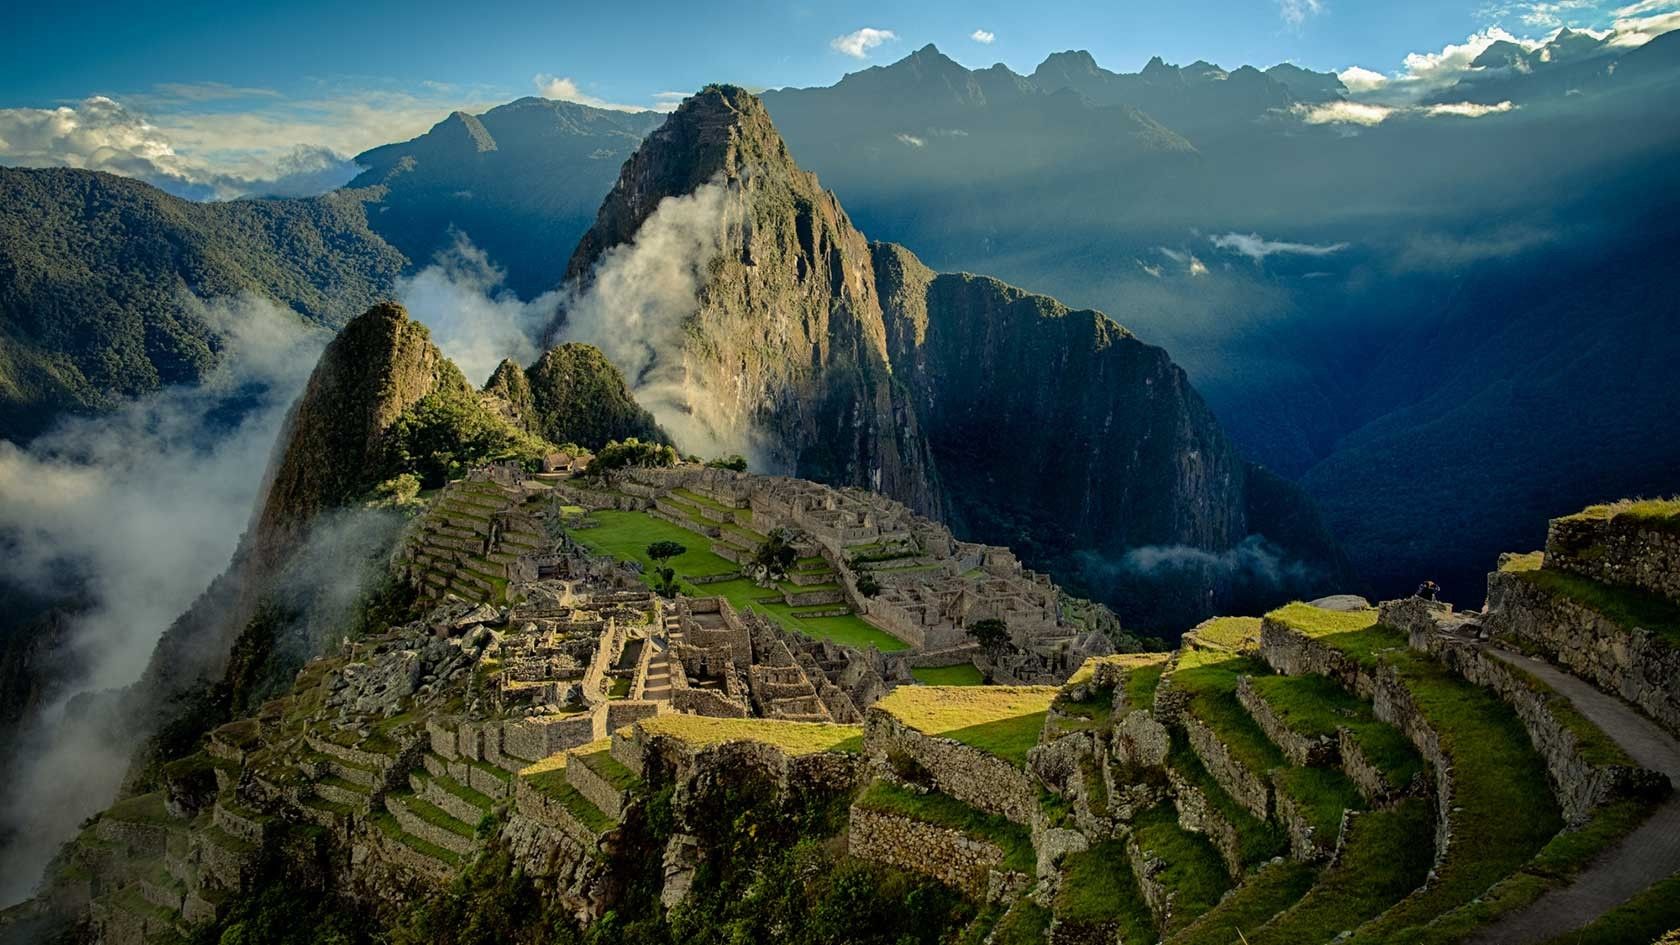 #archeology, #mountains, #World Heritage Site, #landscape, #Peru, #Machu Picchu, #ruin, #nature, #mist, wallpaper